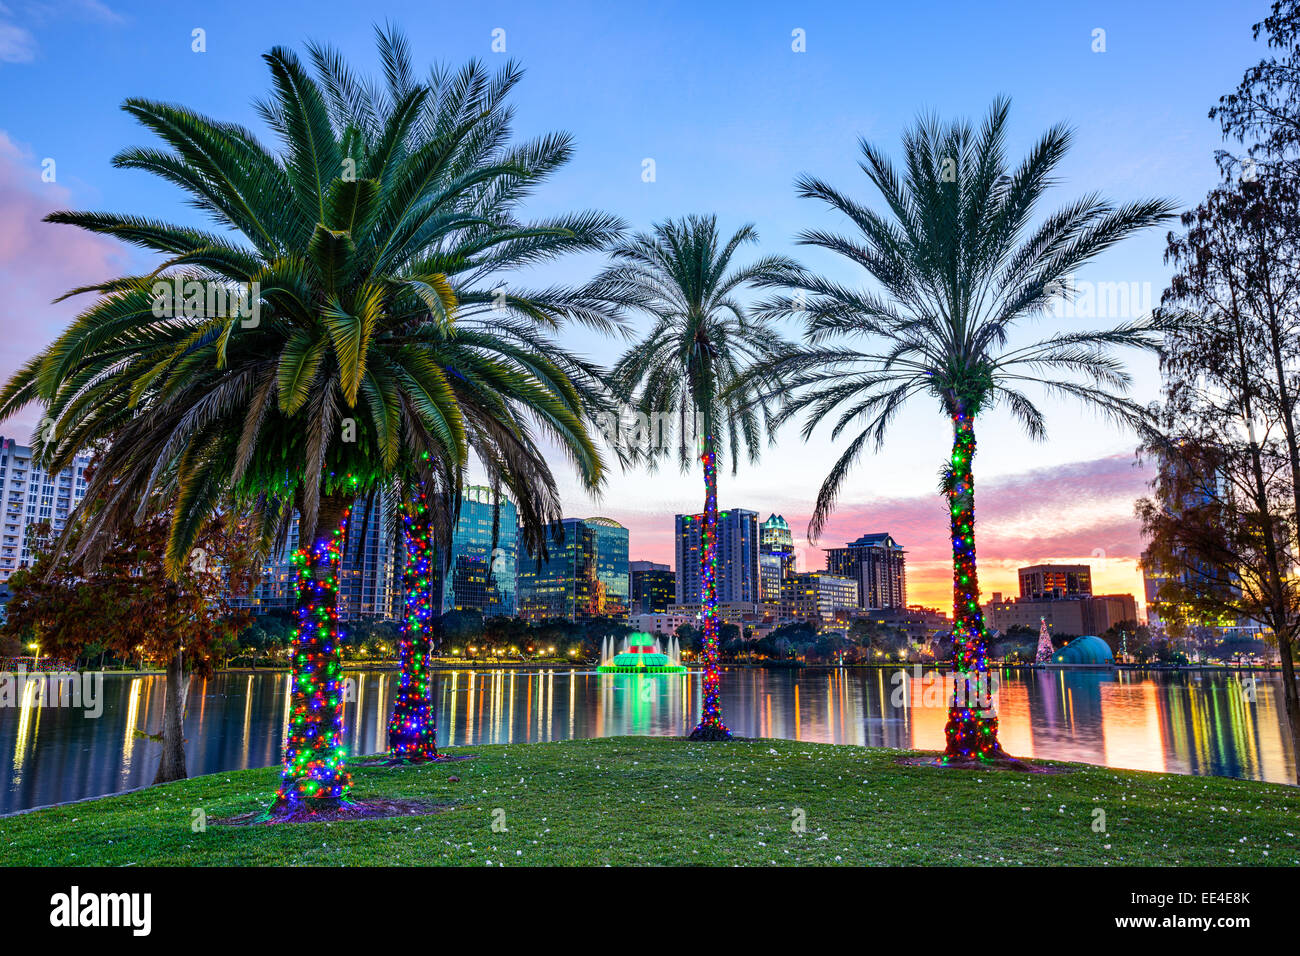 Orlando florida fotografías e imágenes de alta resolución - Alamy